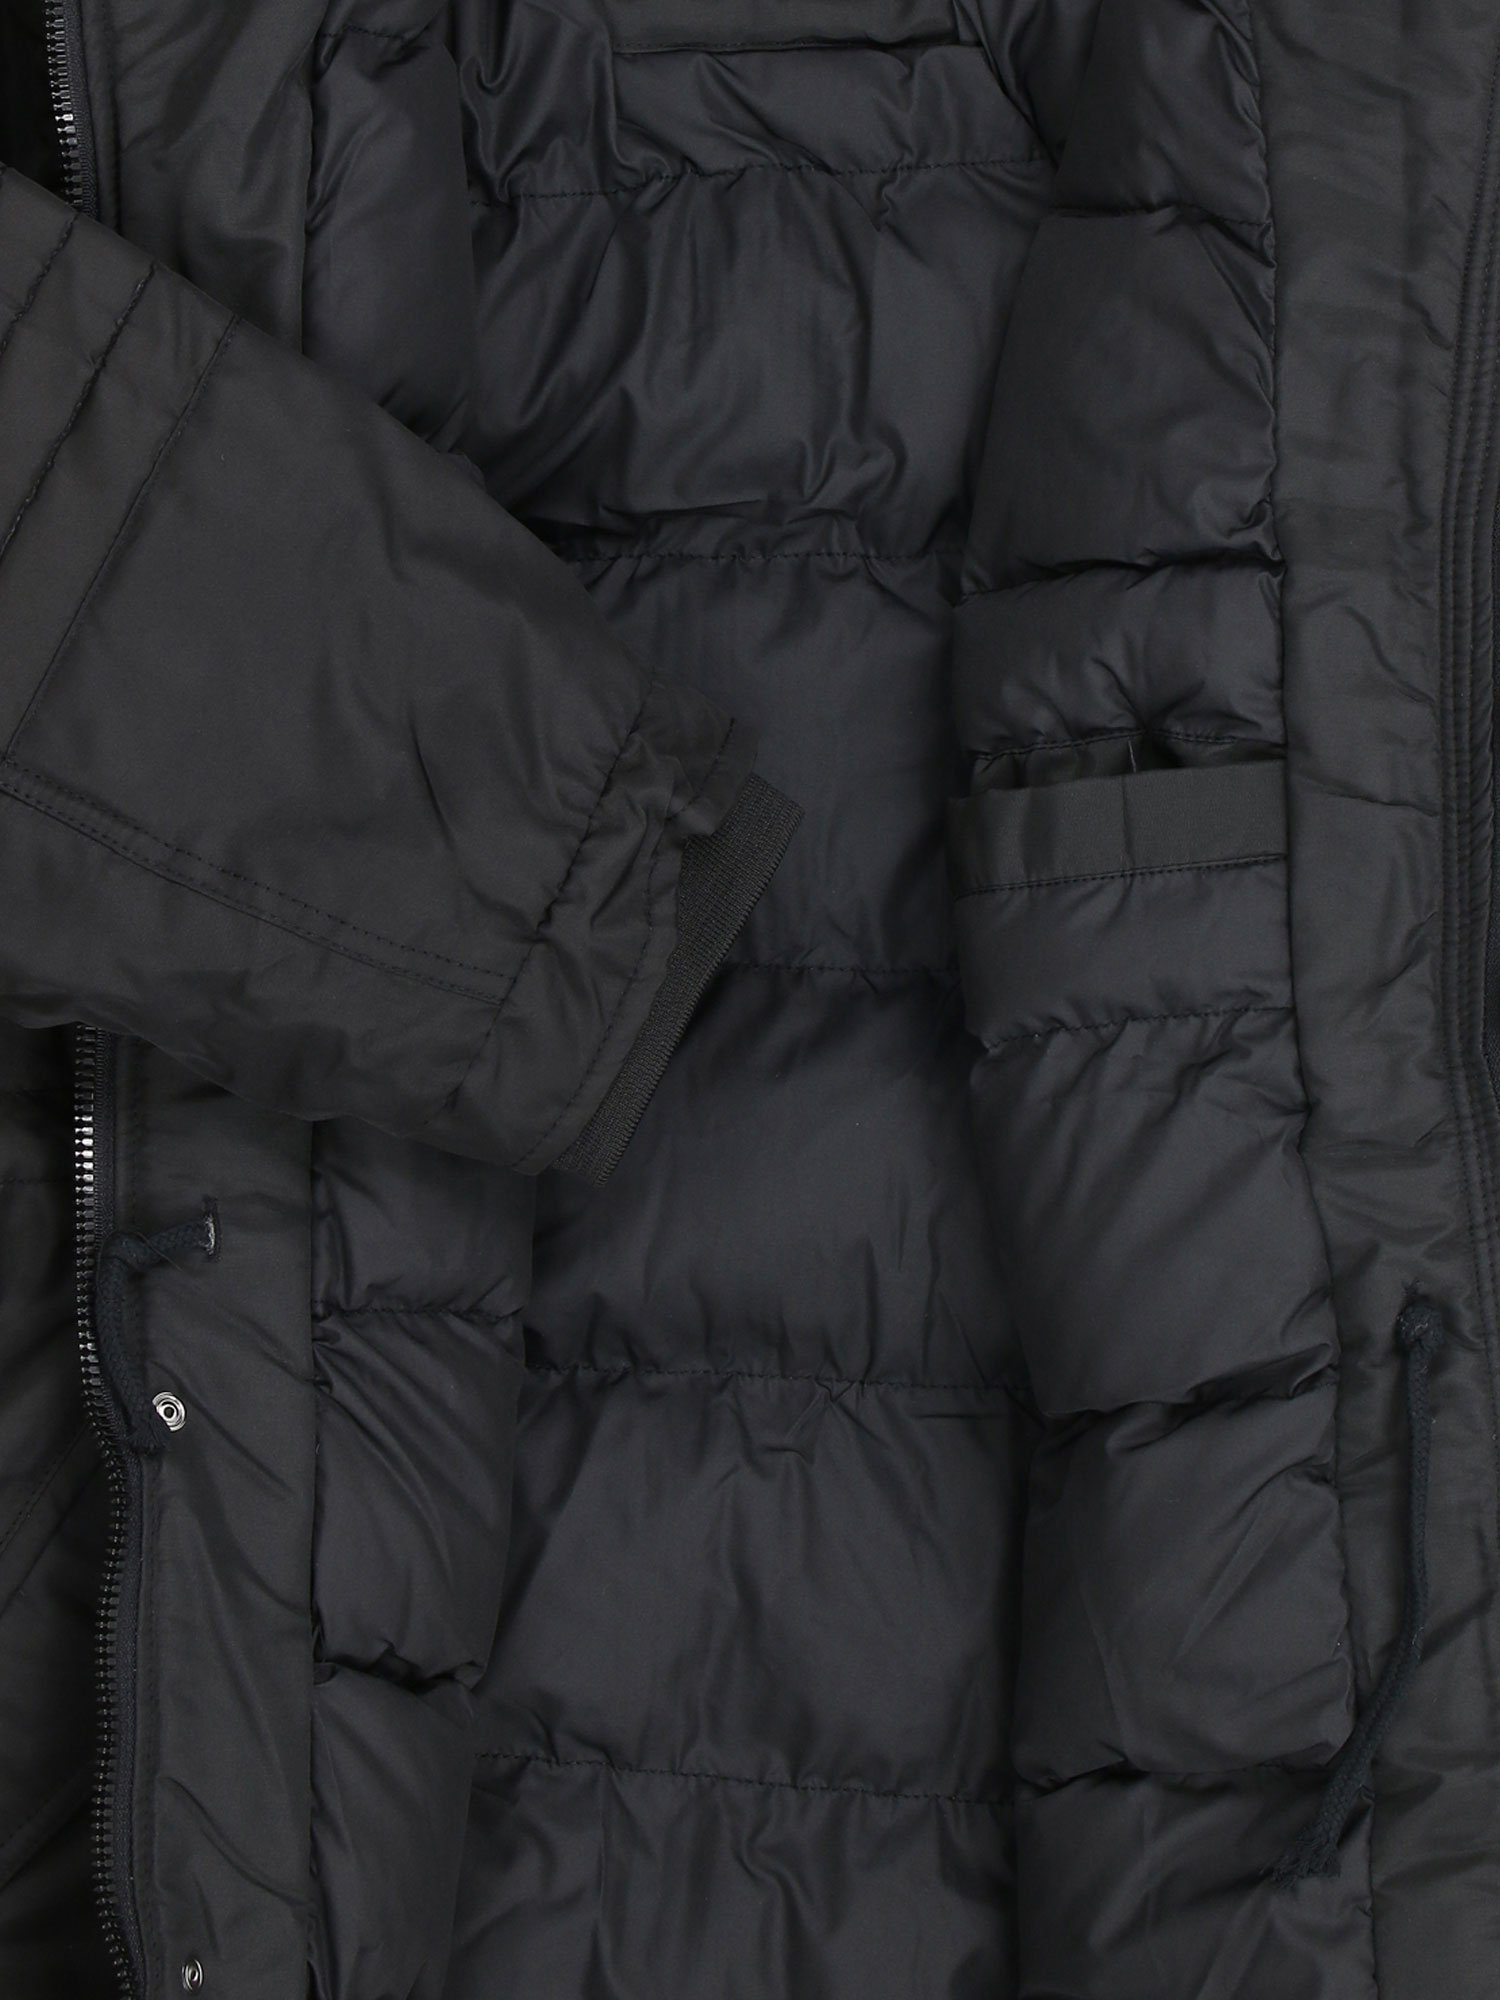 LV-700 abnehmbarer & Jacke Kapuze Übergrößen Winterjacke Lavecchia schwarz gefütterterter mit